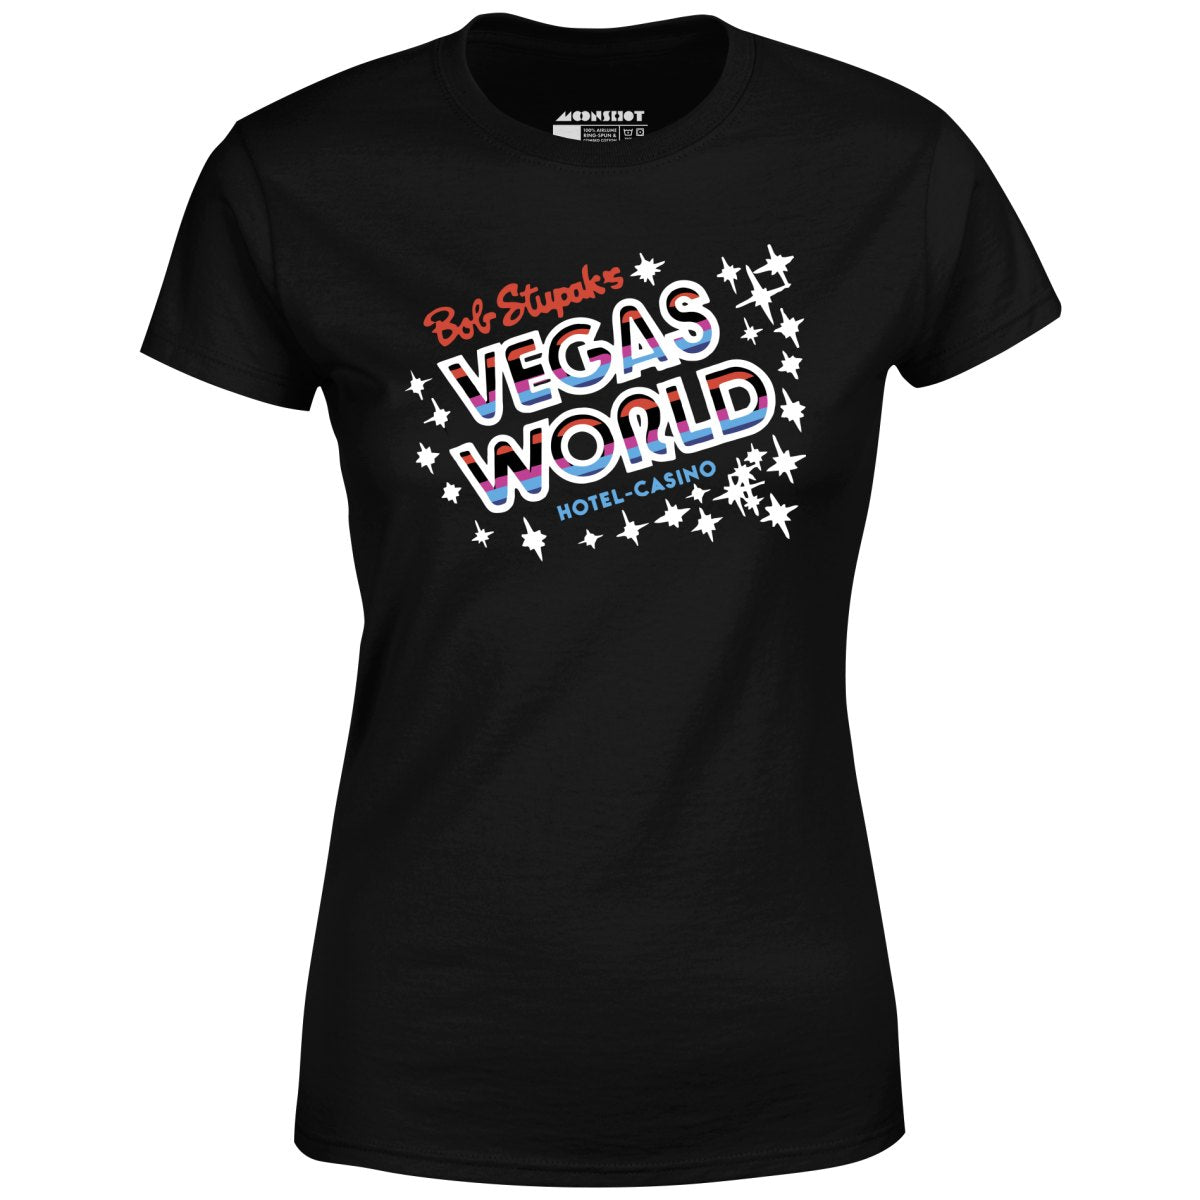 Bob Stupak's Vegas World - Vintage Las Vegas - Women's T-Shirt